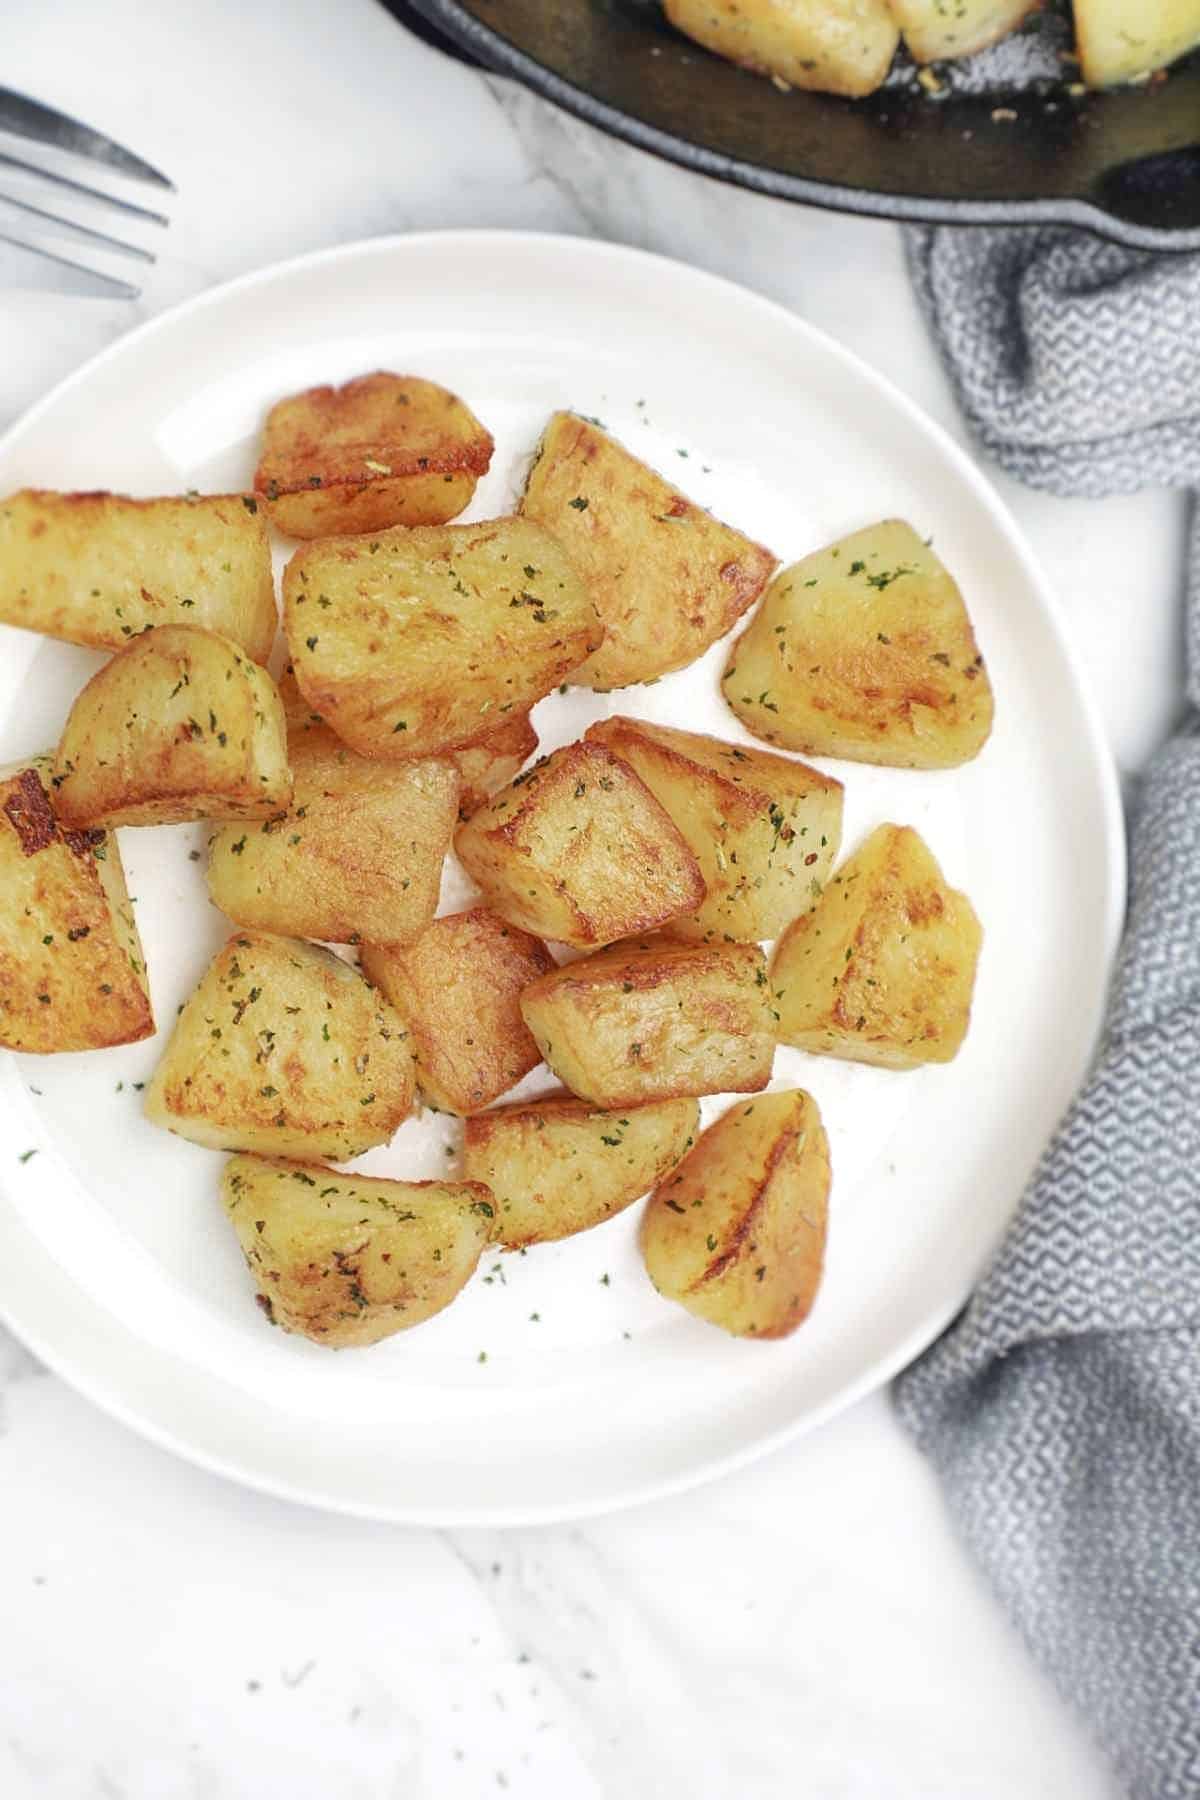 fried potatoes served on a plate.